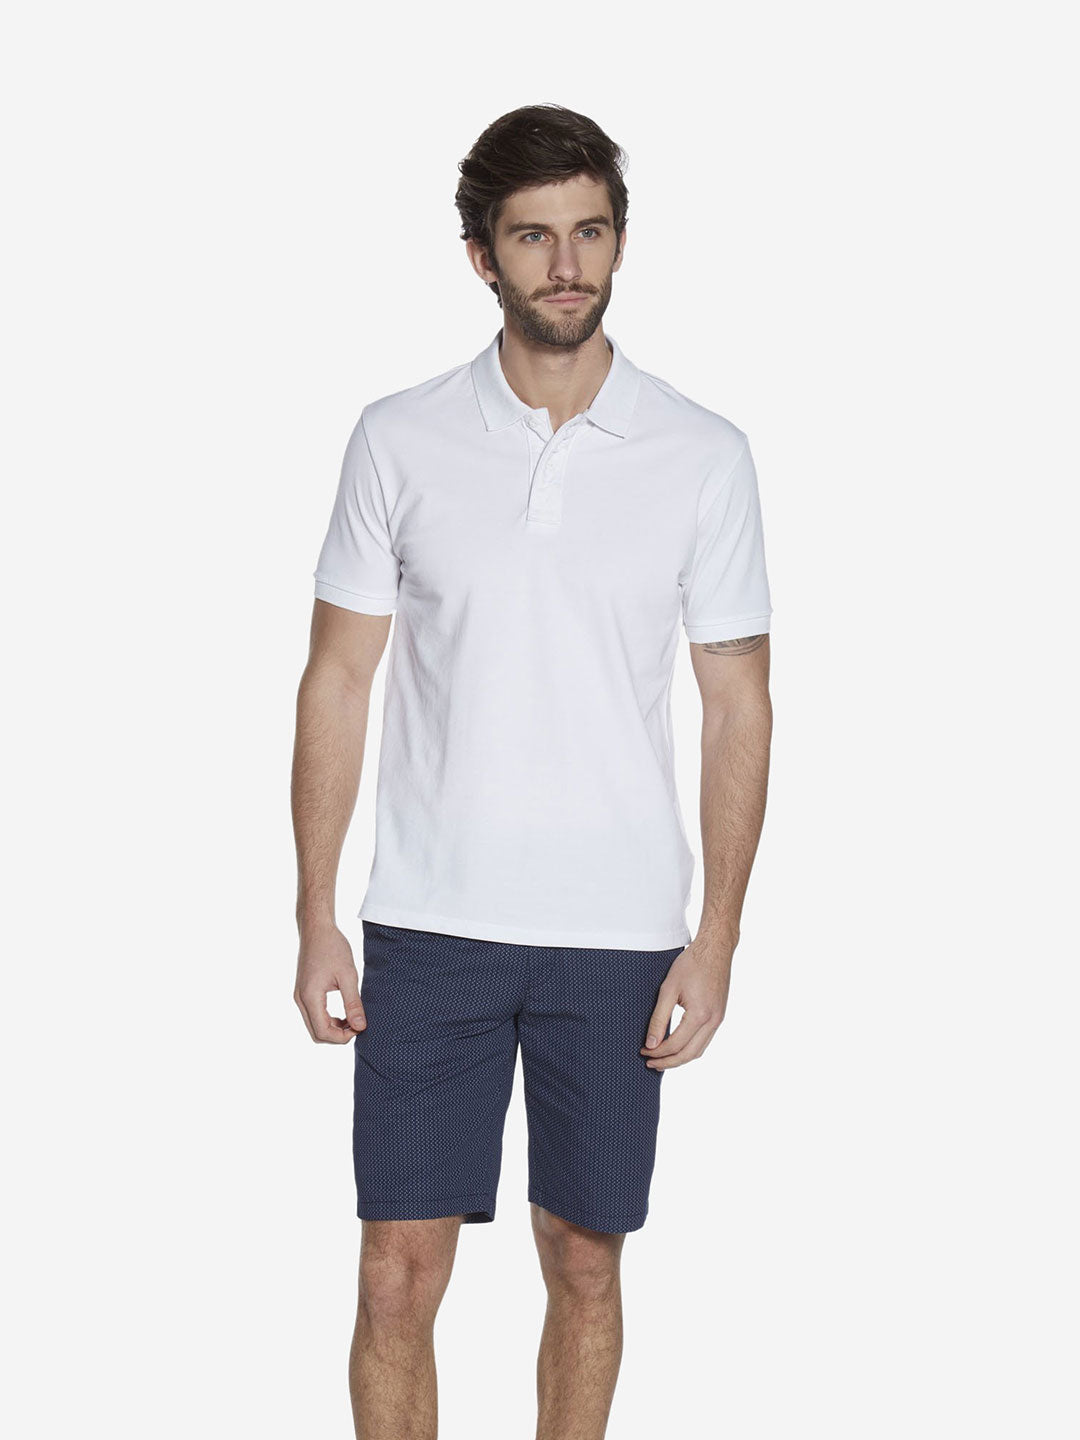 Westsport White Slim Fit Polo T-Shirt | White Slim Fit Polo T-Shirt | White Slim Fit Polo T-Shirt for Men Front View - Westside